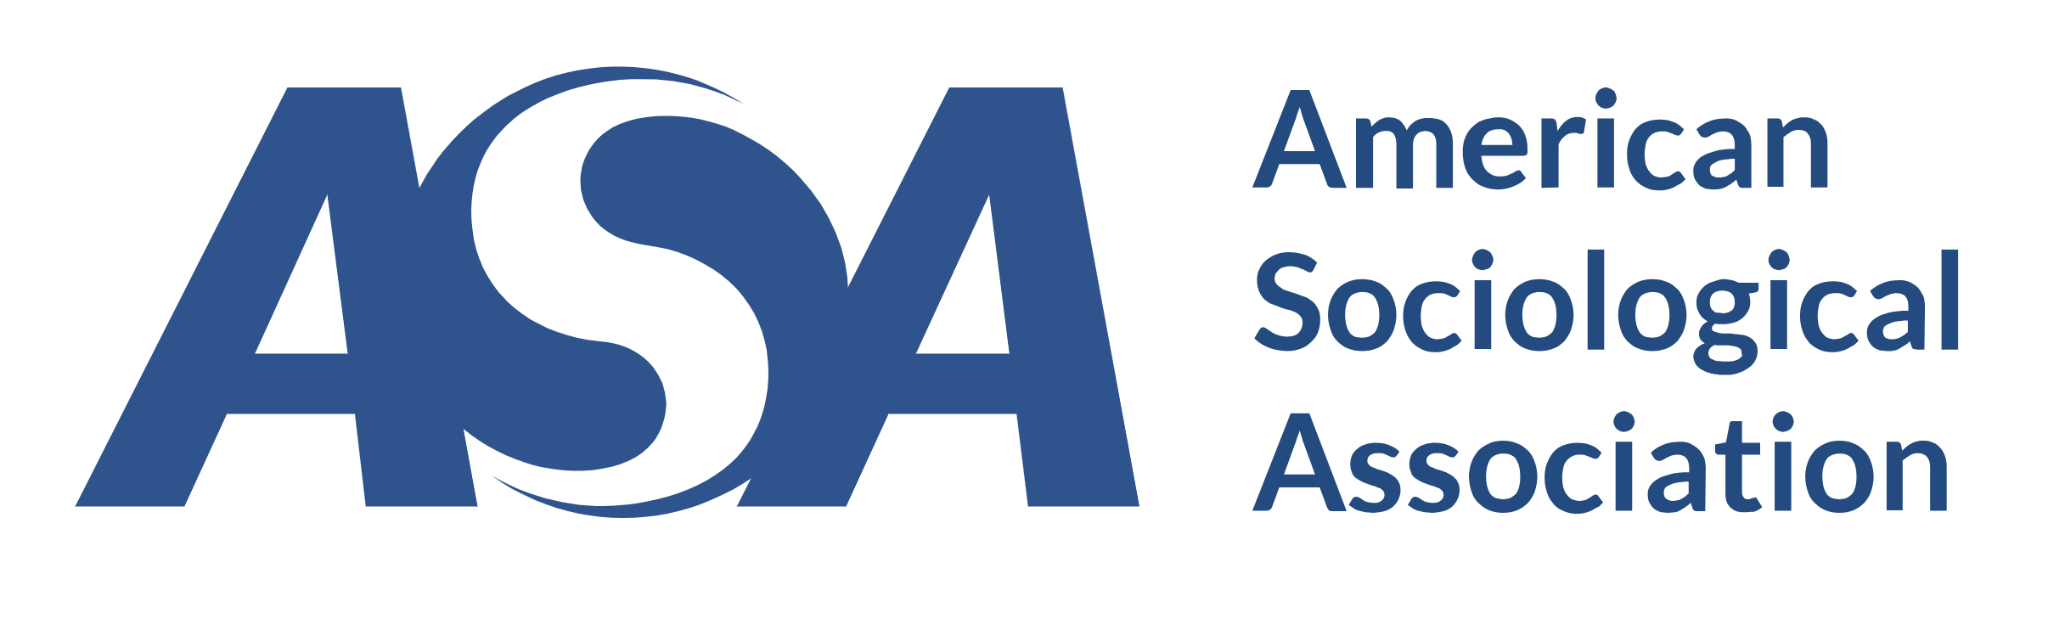 American Sociological Association logo.